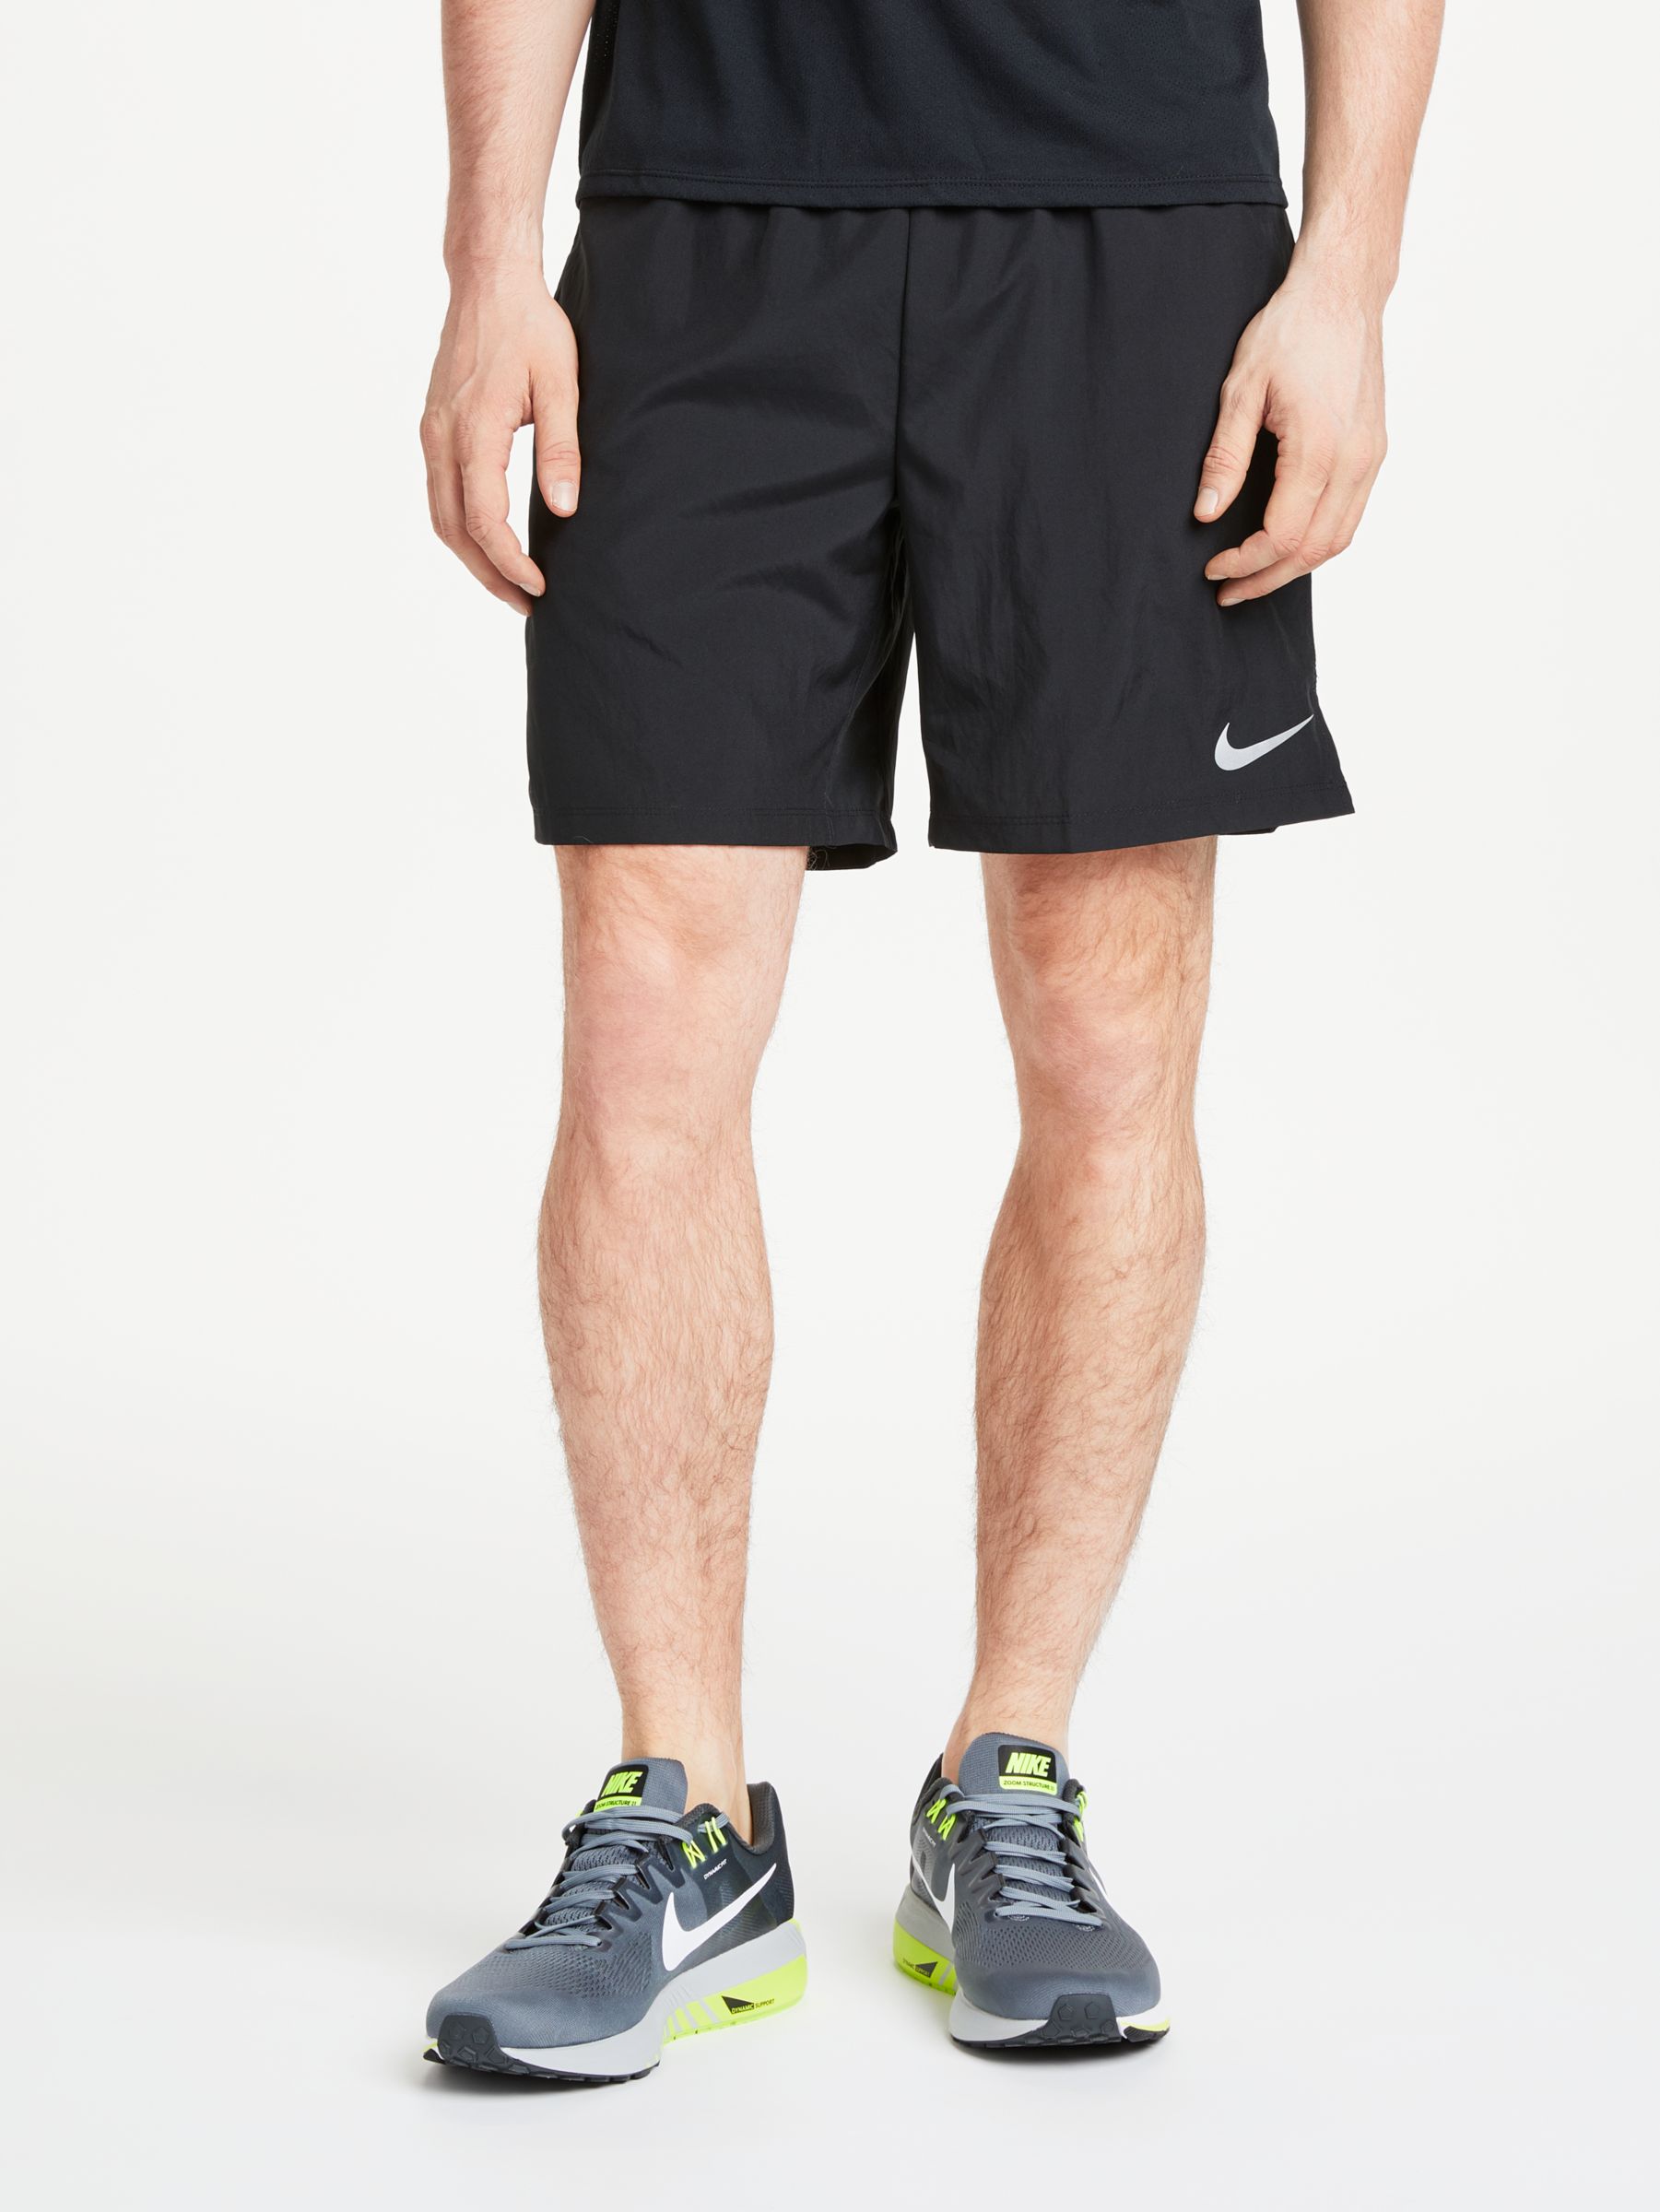 nike running challenger 7 inch shorts in black